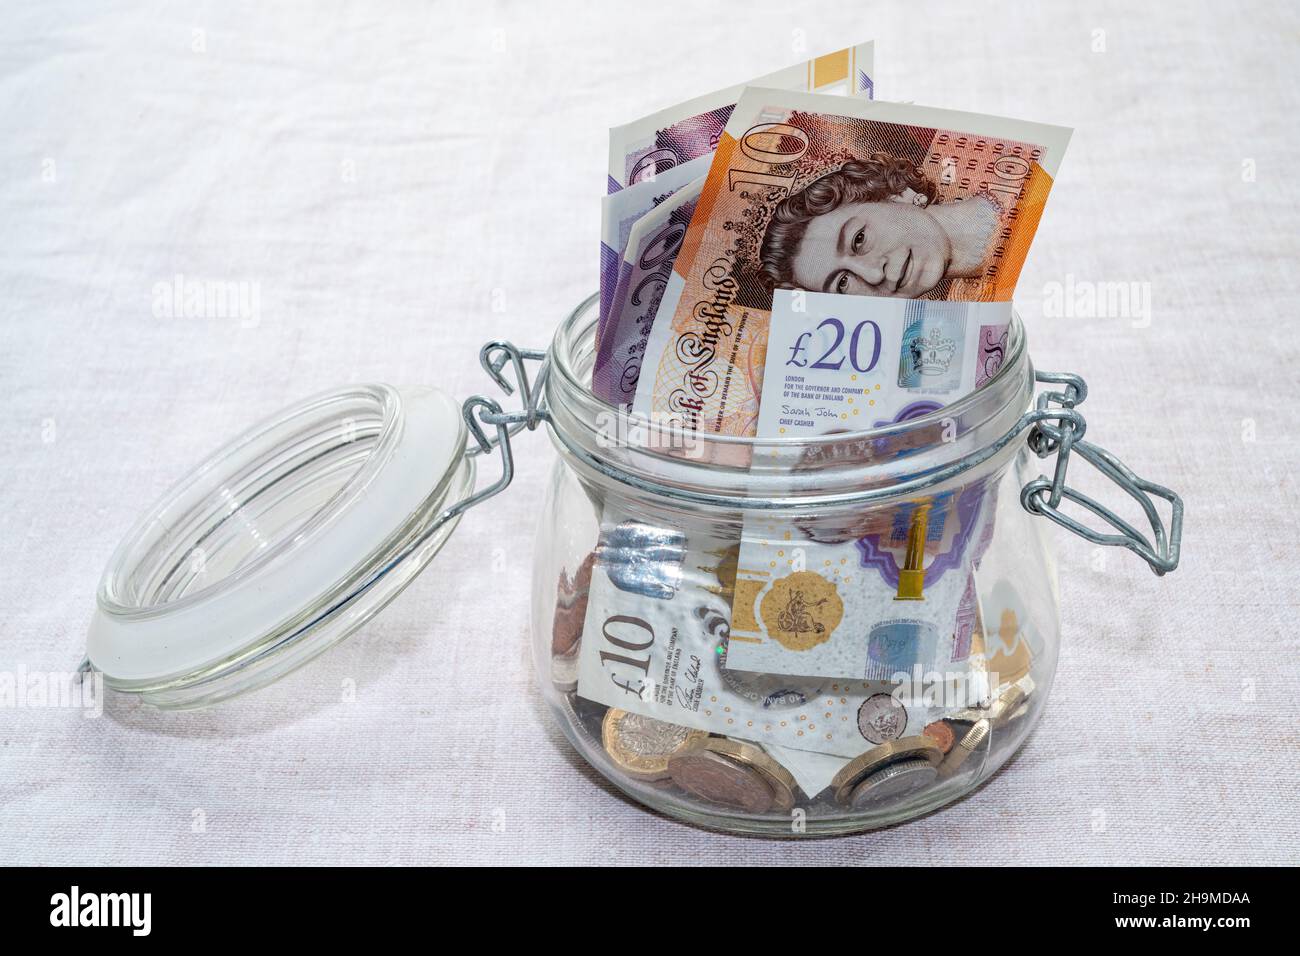 British money stored in a glass jar Stock Photo